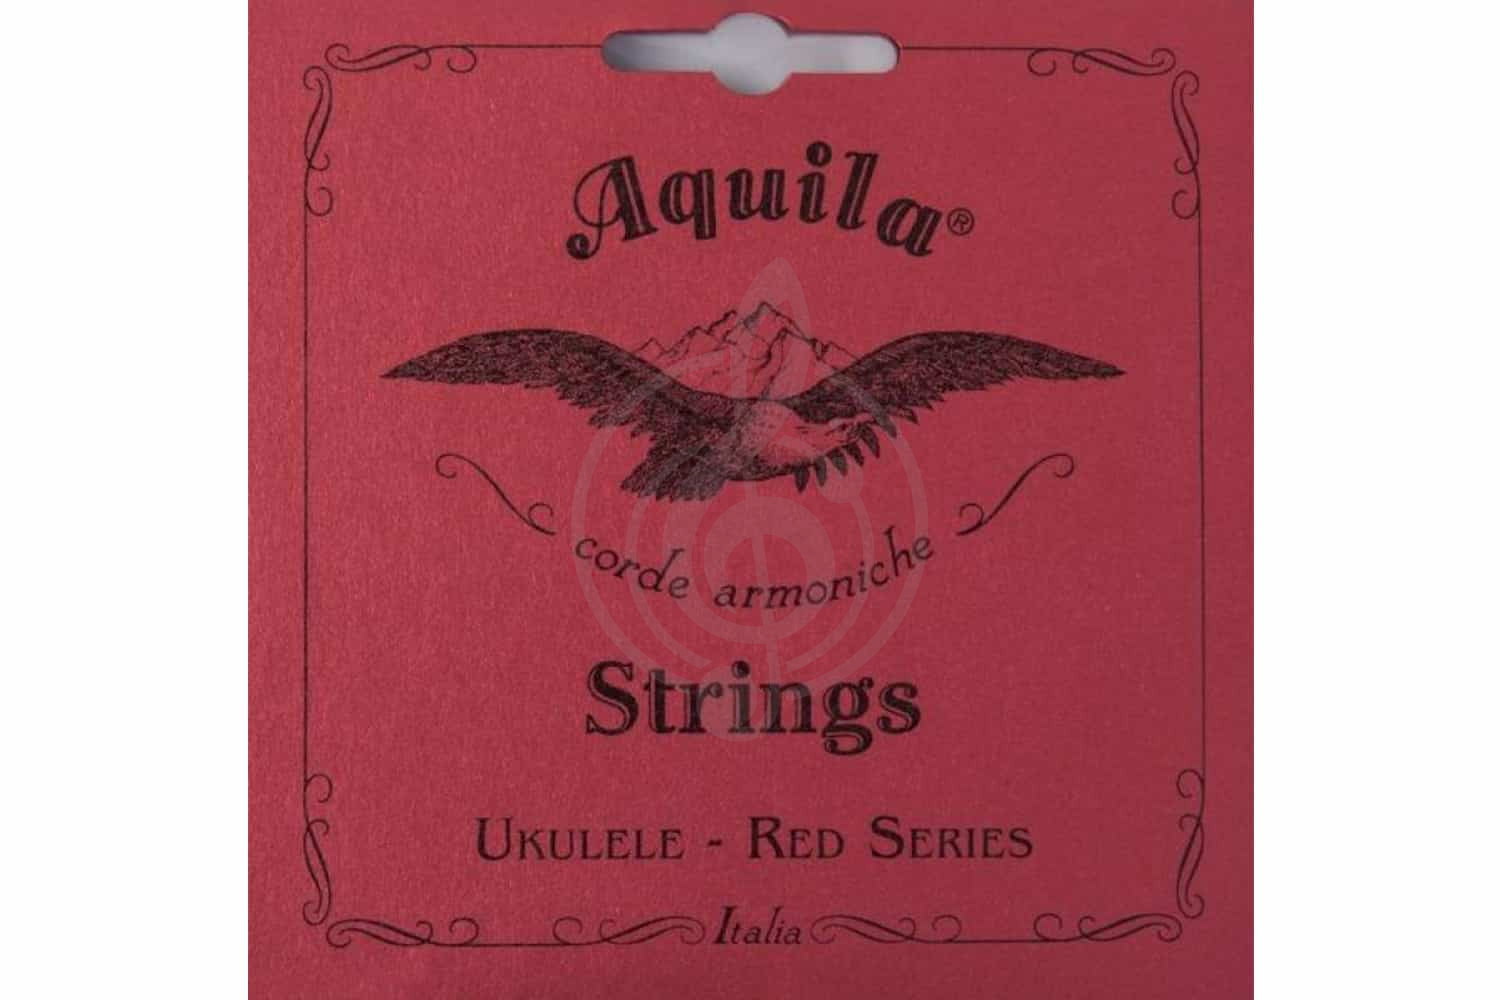 Струны для укулеле баритон Струны для укулеле баритон Aquila AQUILA 89U - Струны для укулеле баритон 89U - фото 1